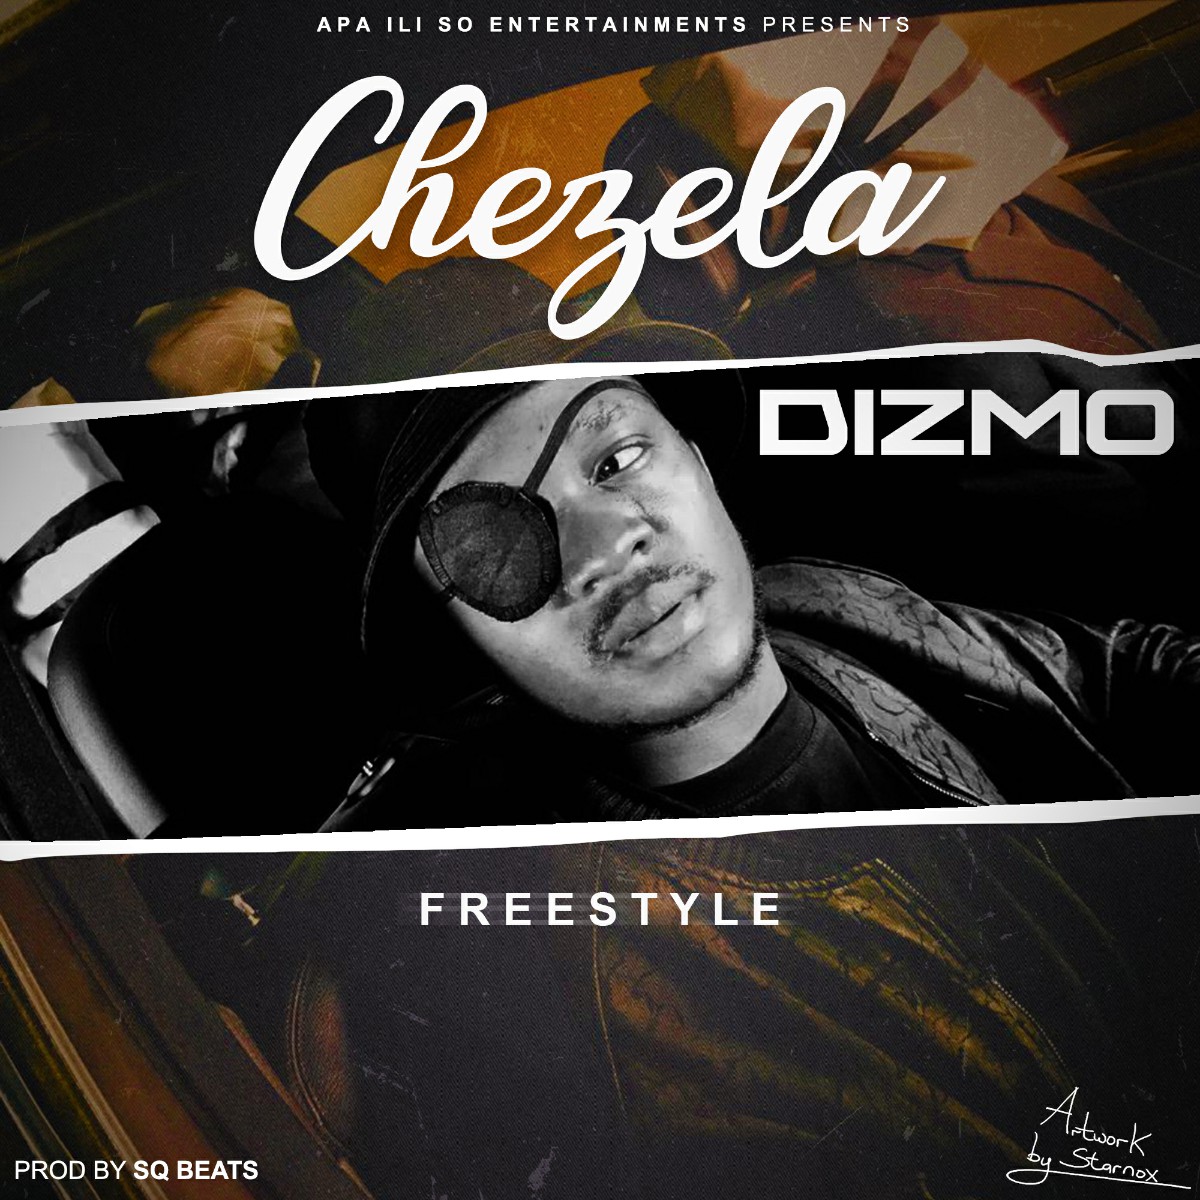 Dizmo – Chezela (Freestyle) Mp3 Download